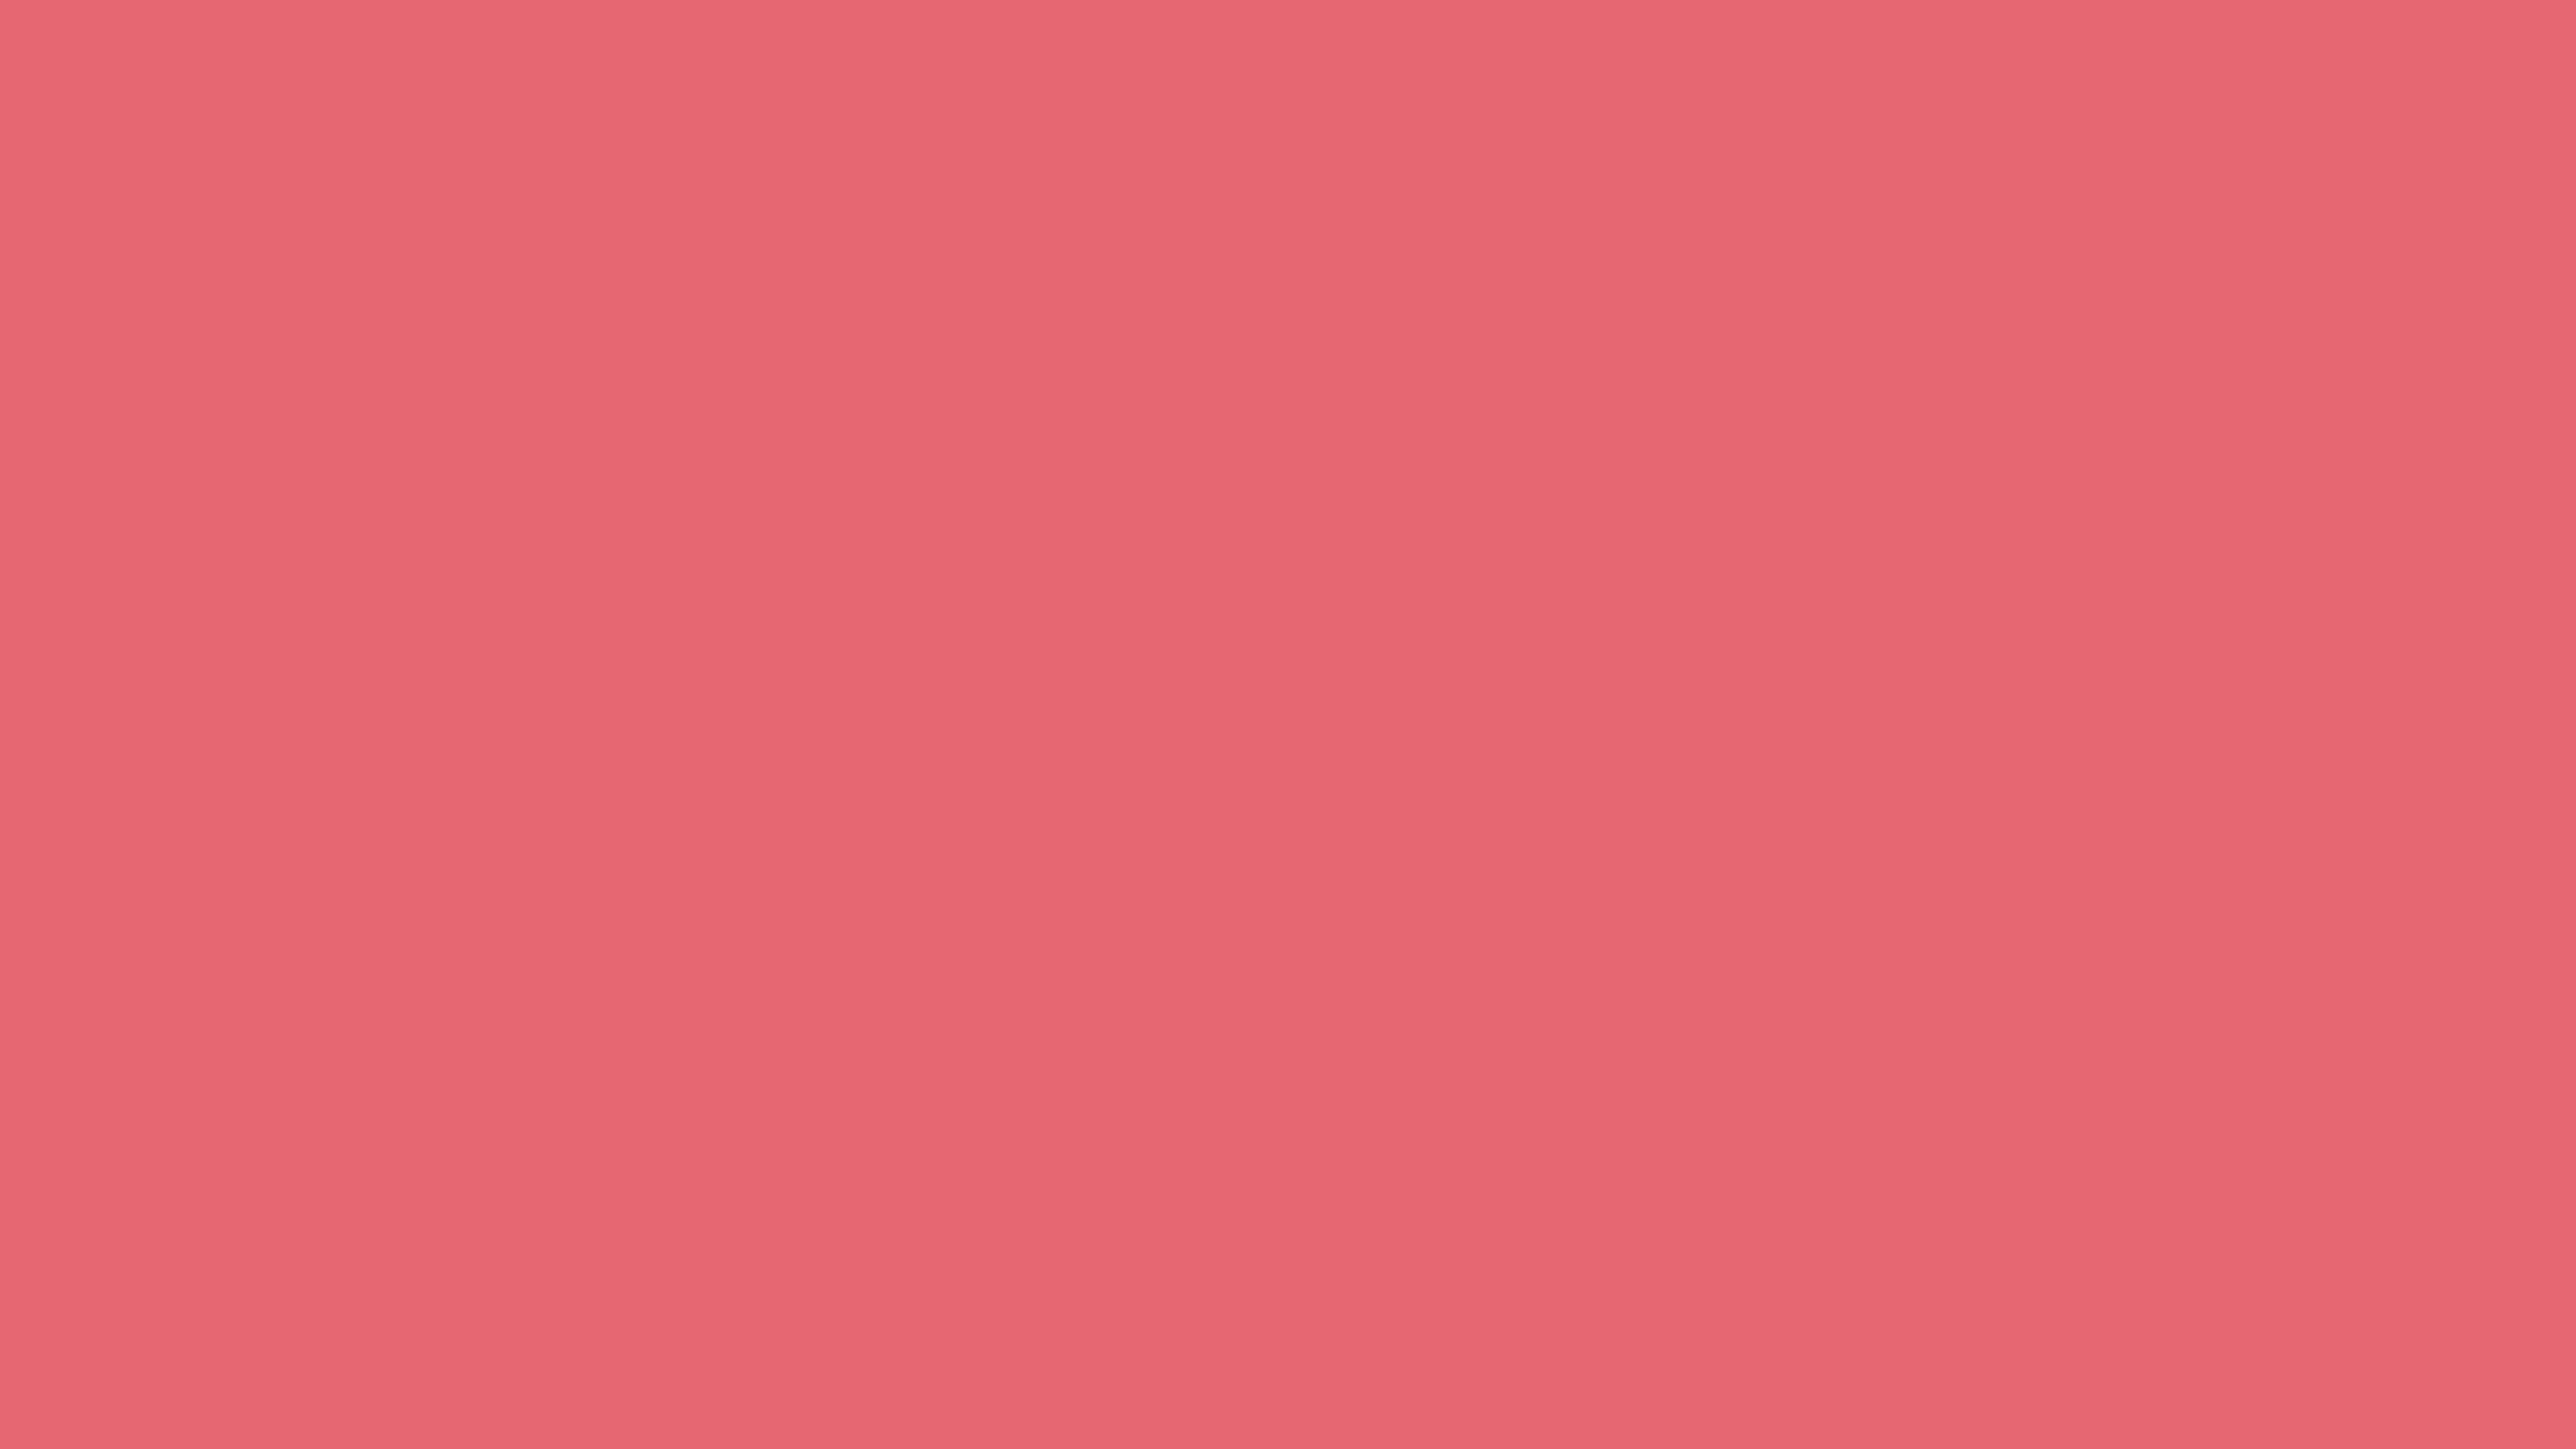 3840x2160 Light Carmine Pink Solid Color Background